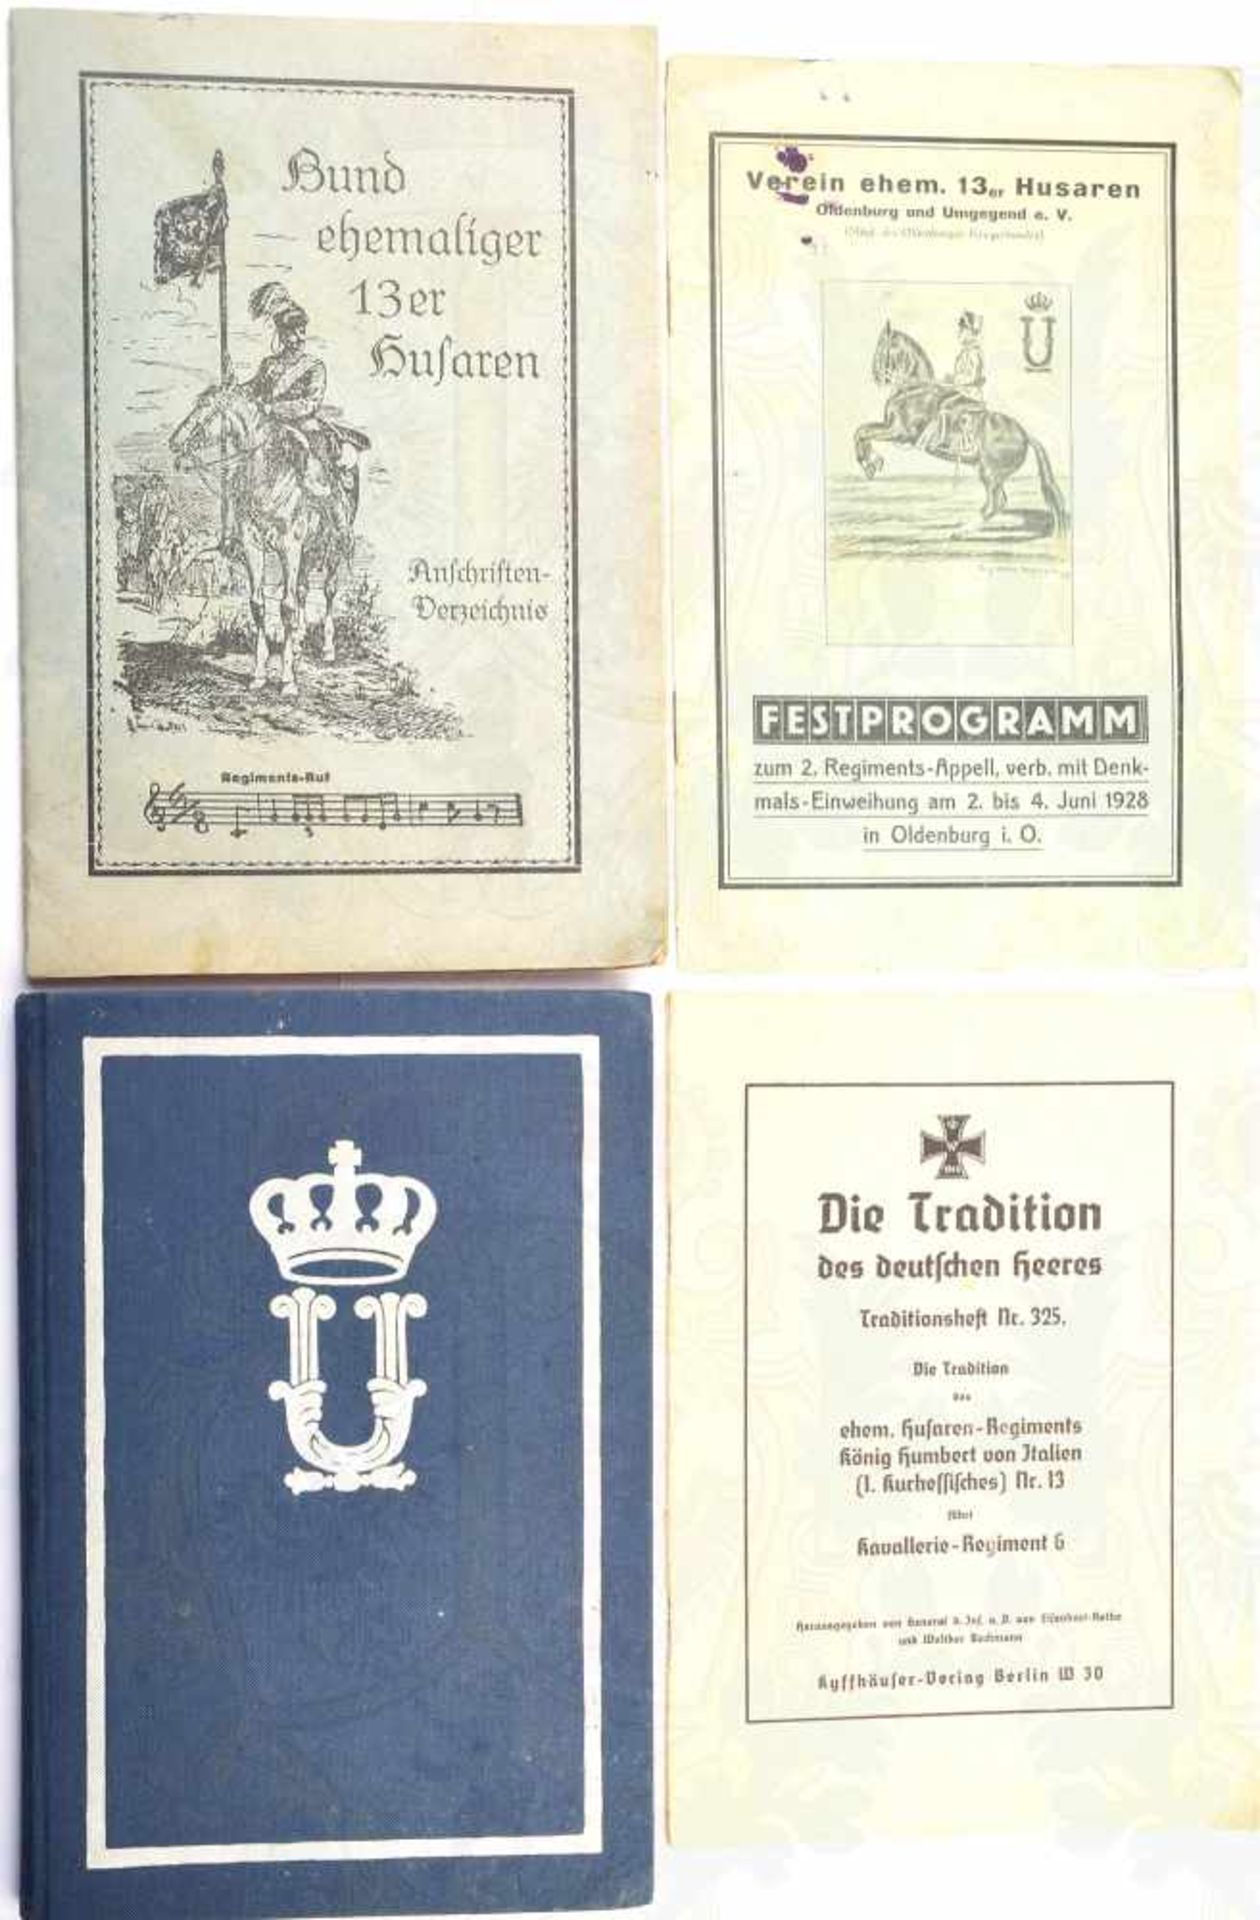 HUSAREN-REGIMENT KÖNIG HUMBERT VON ITALIEN, (1. Kurhessisches) Nr. 13, F. Metzler, Frankfurt/M.